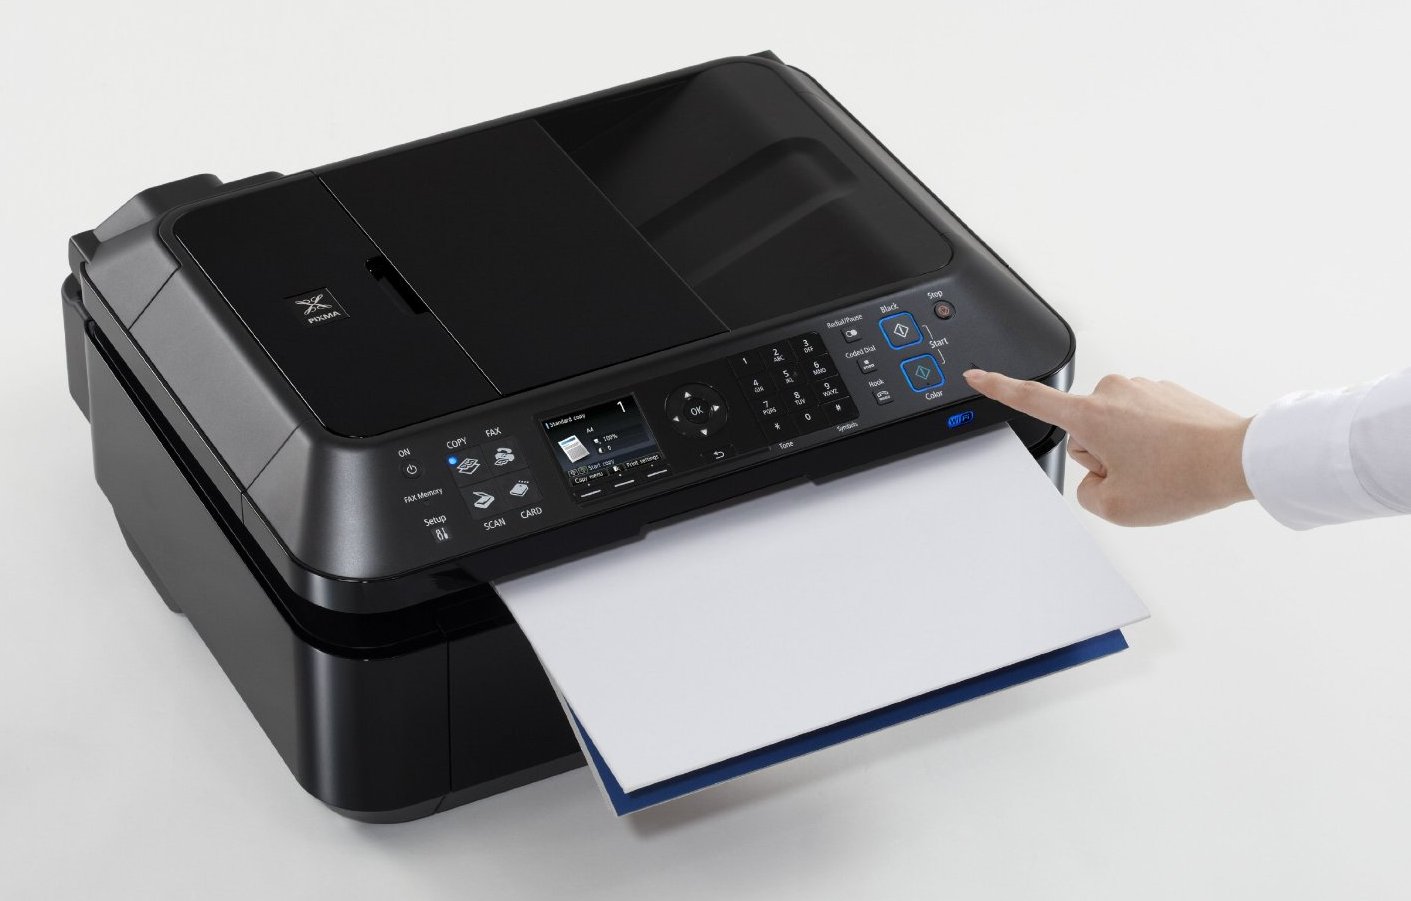 hp office jet printer software for mac seirrea